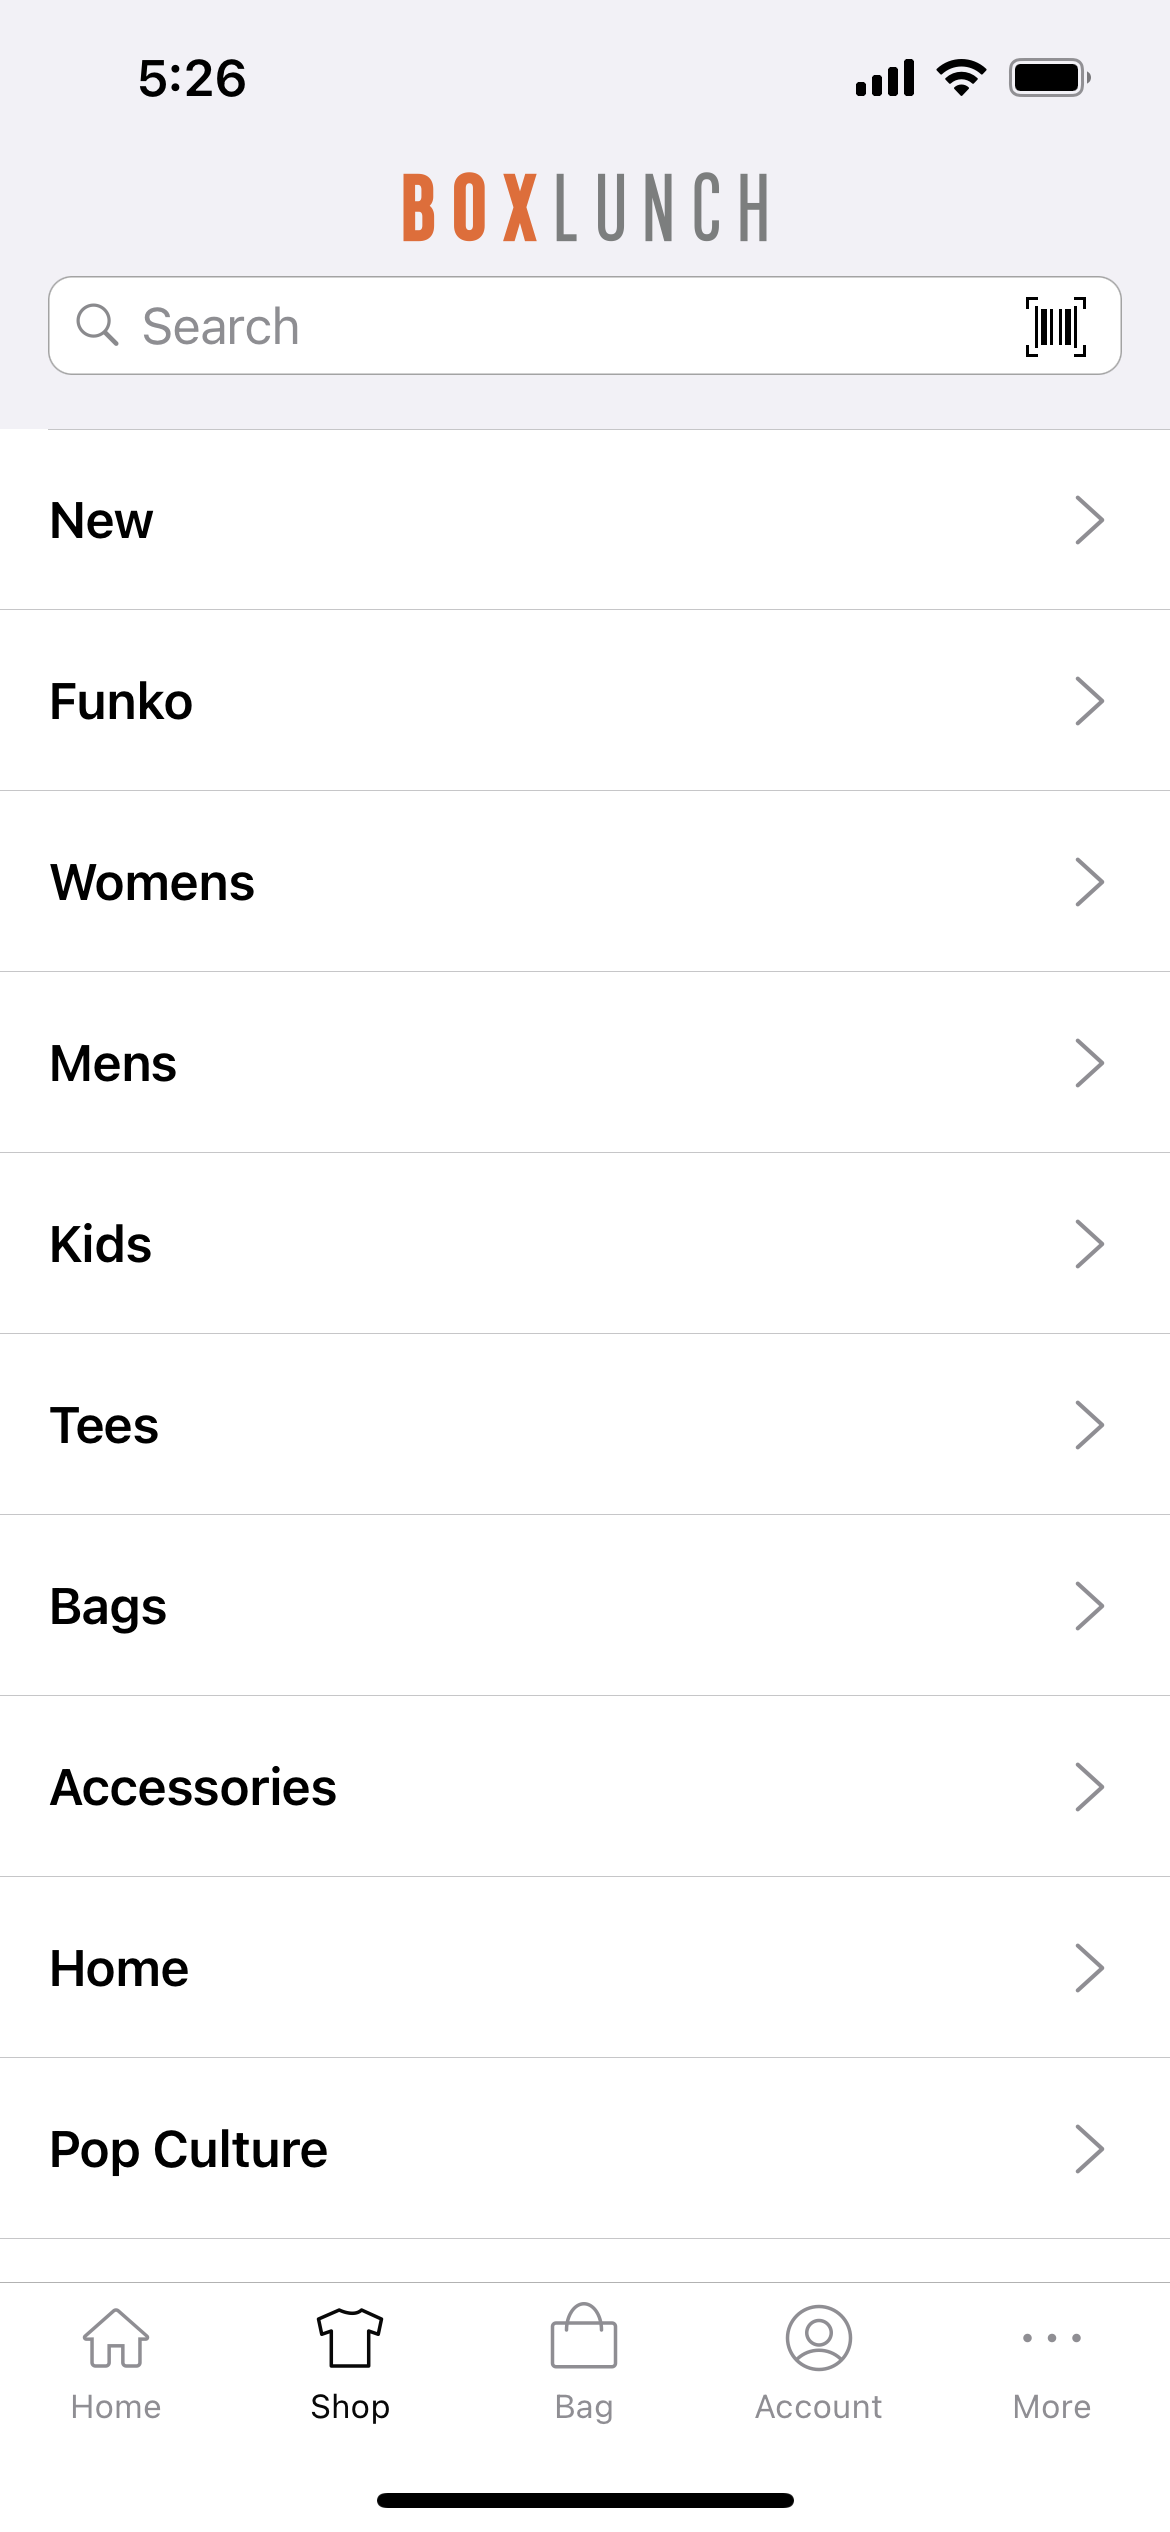 boxlunch app categories